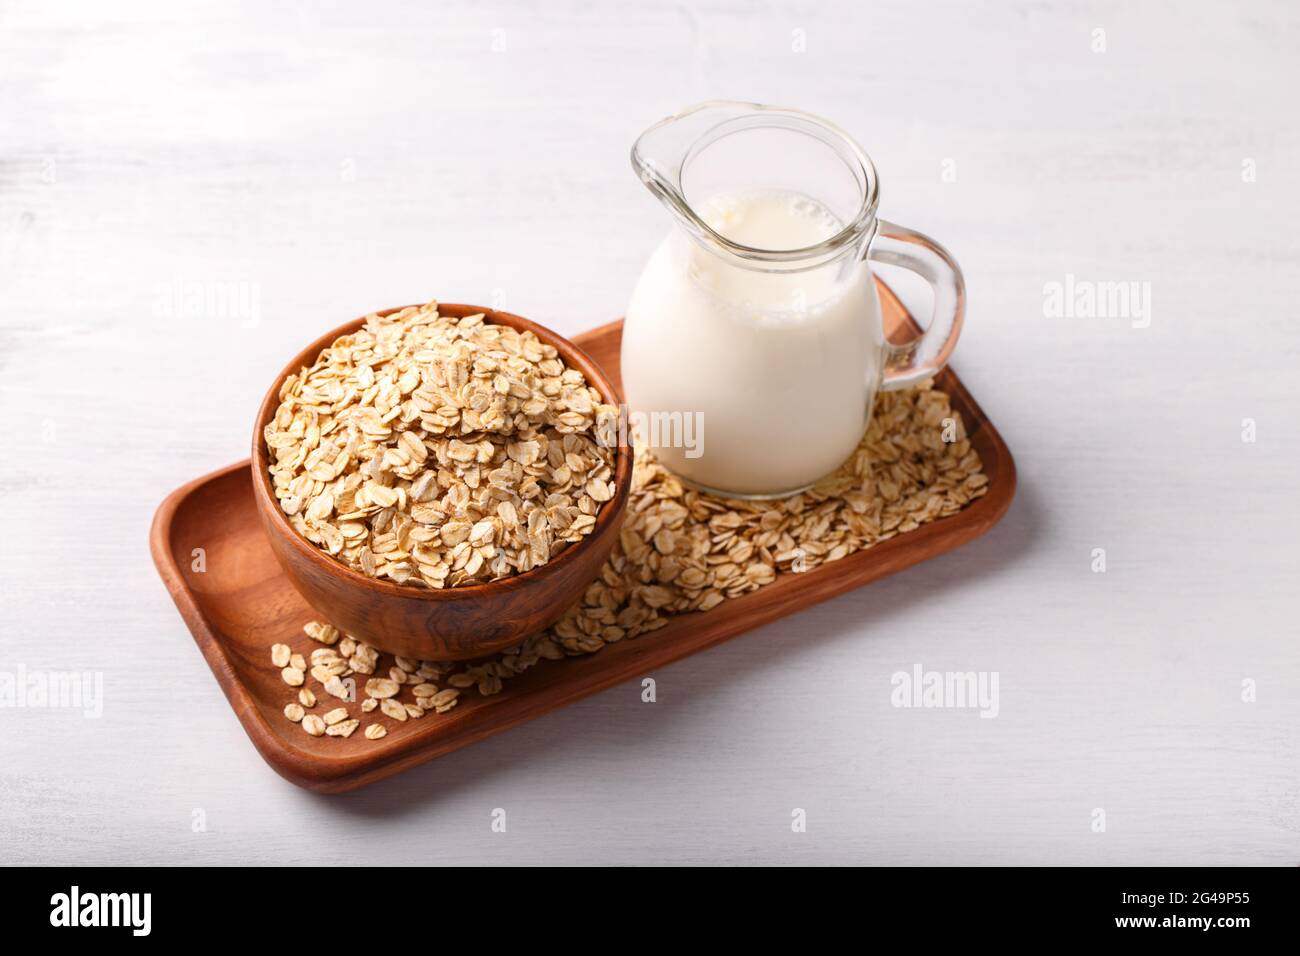 Non dairy oat milk Stock Photo